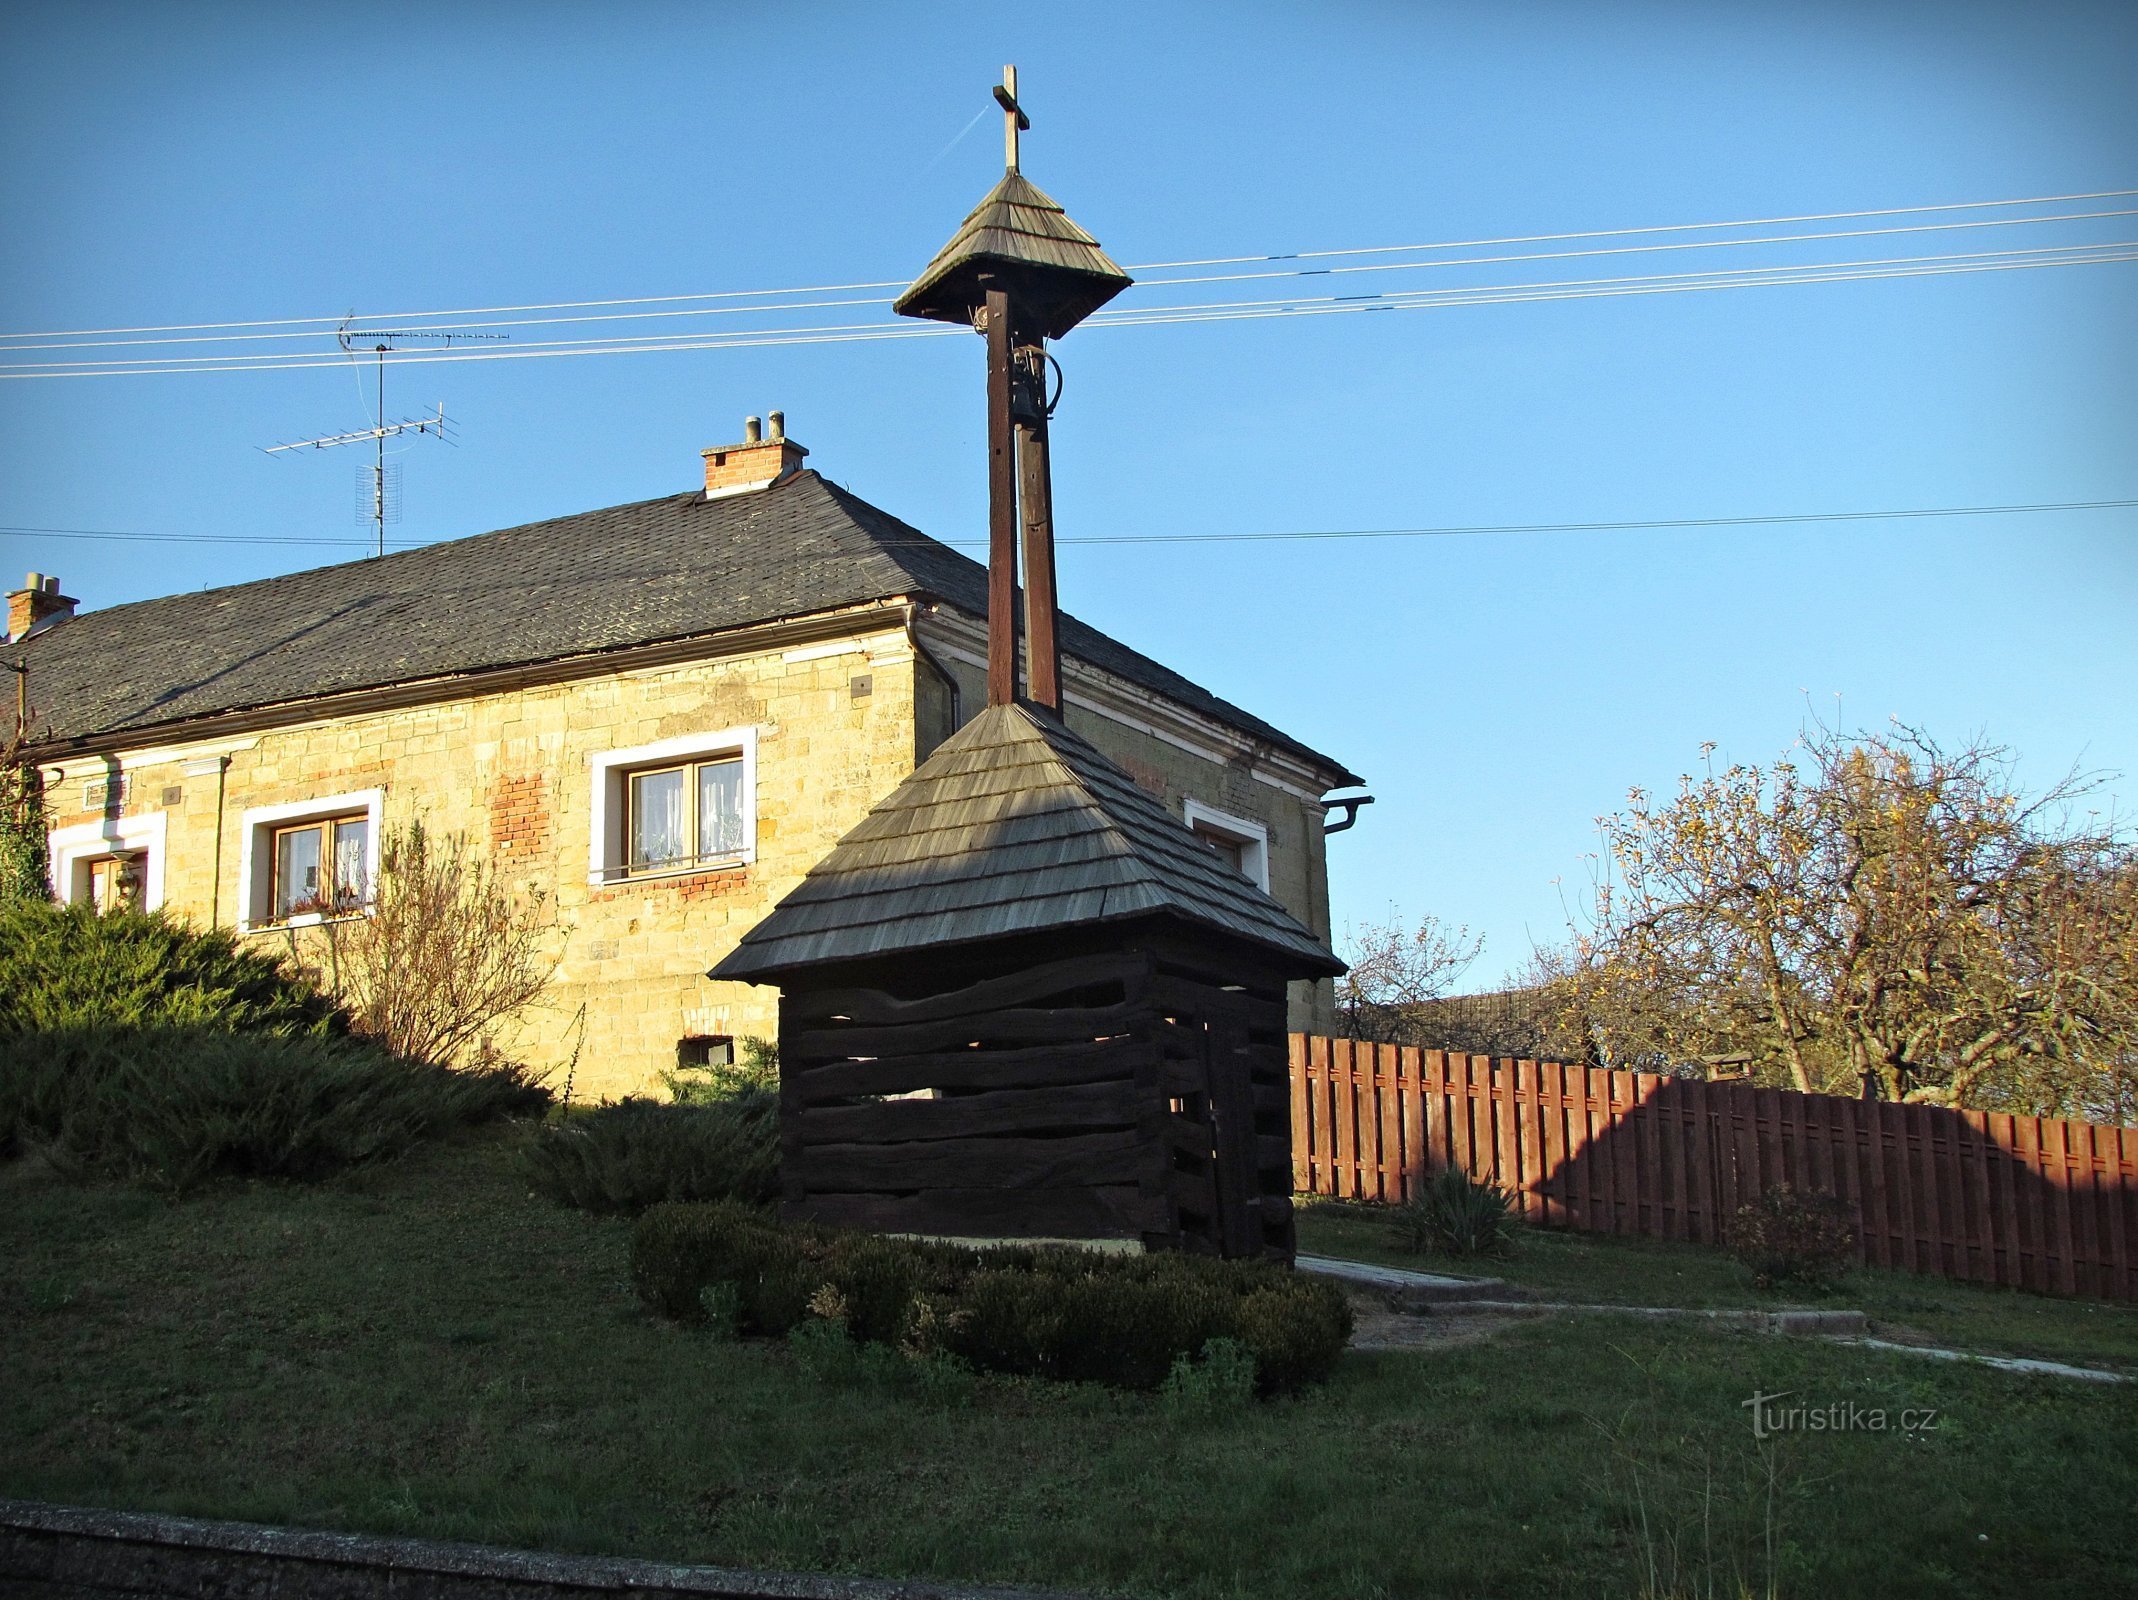 wooden bell tower